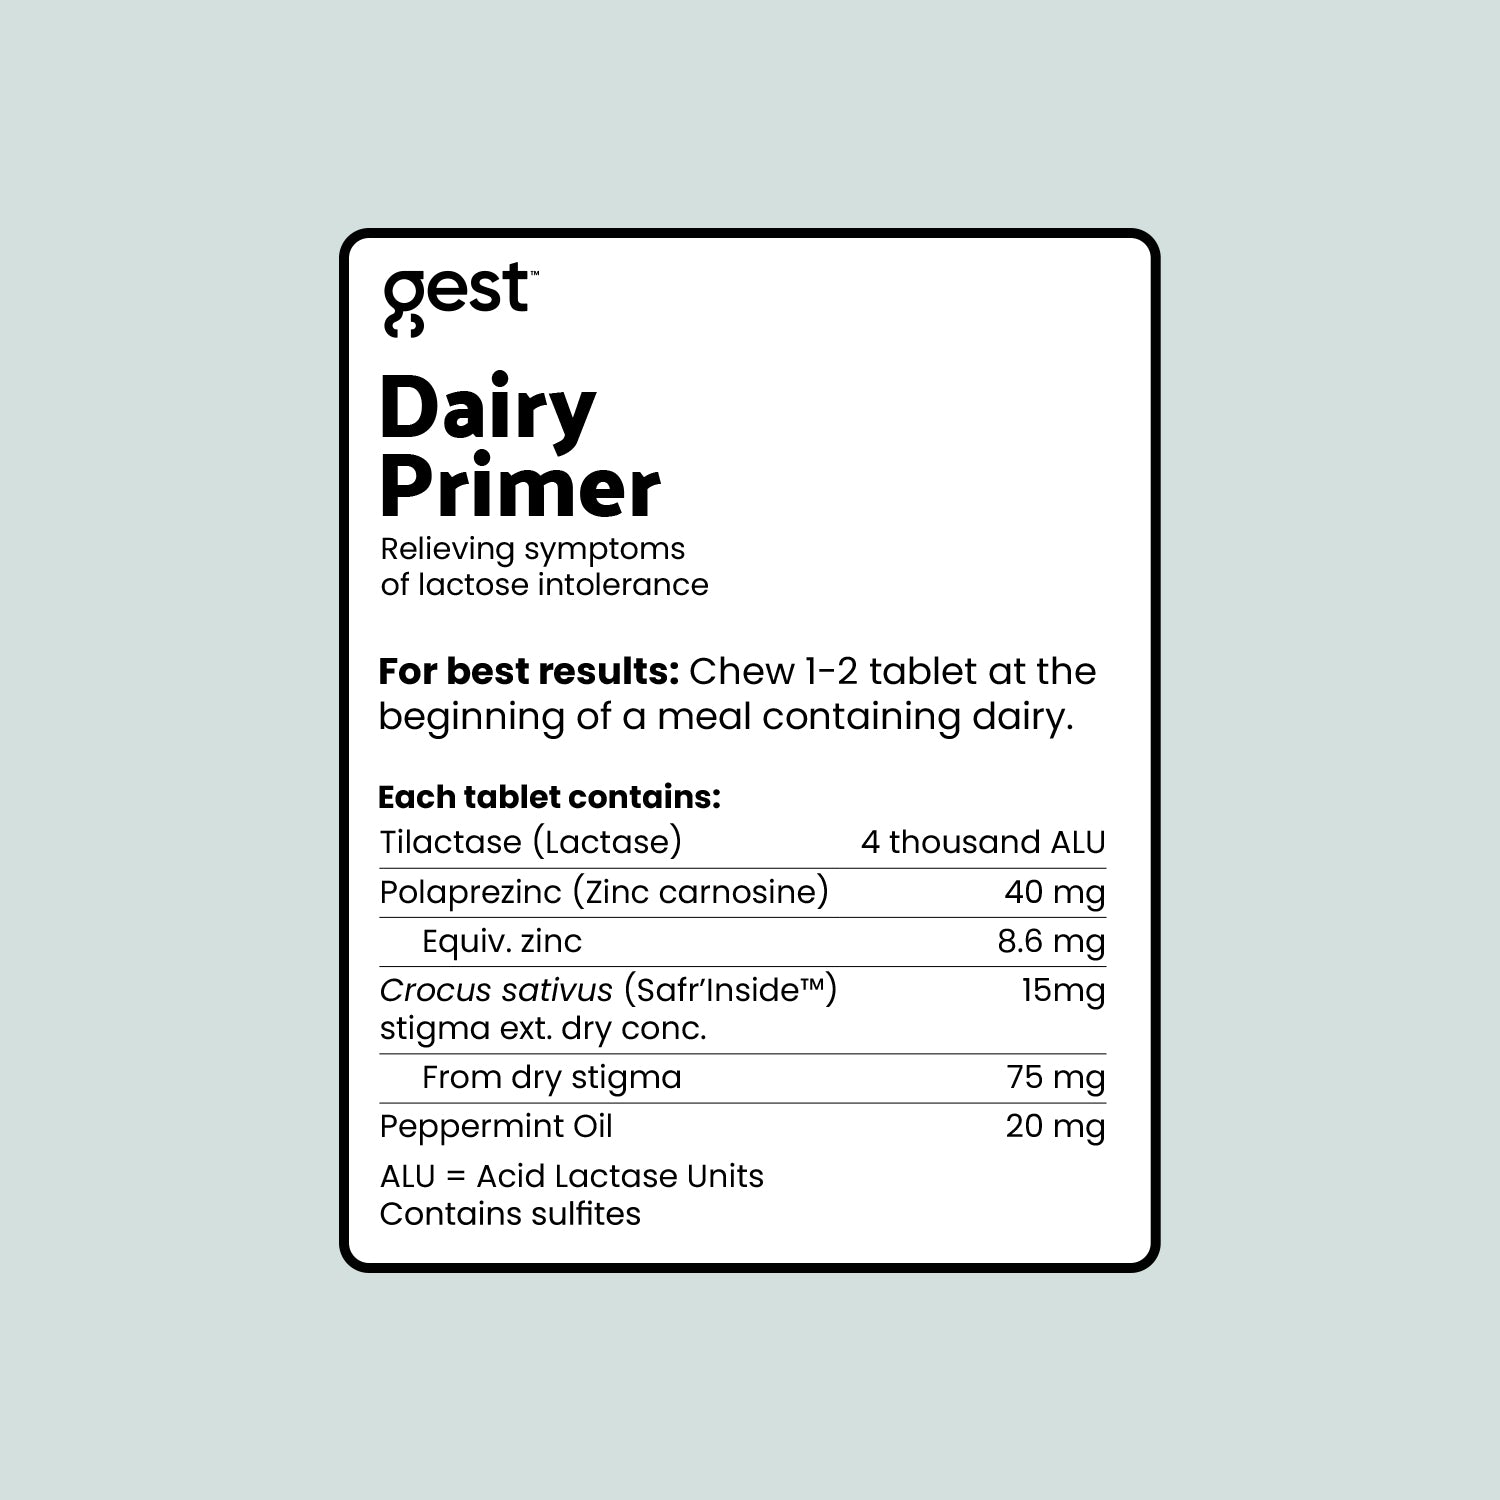 Dairy Primer